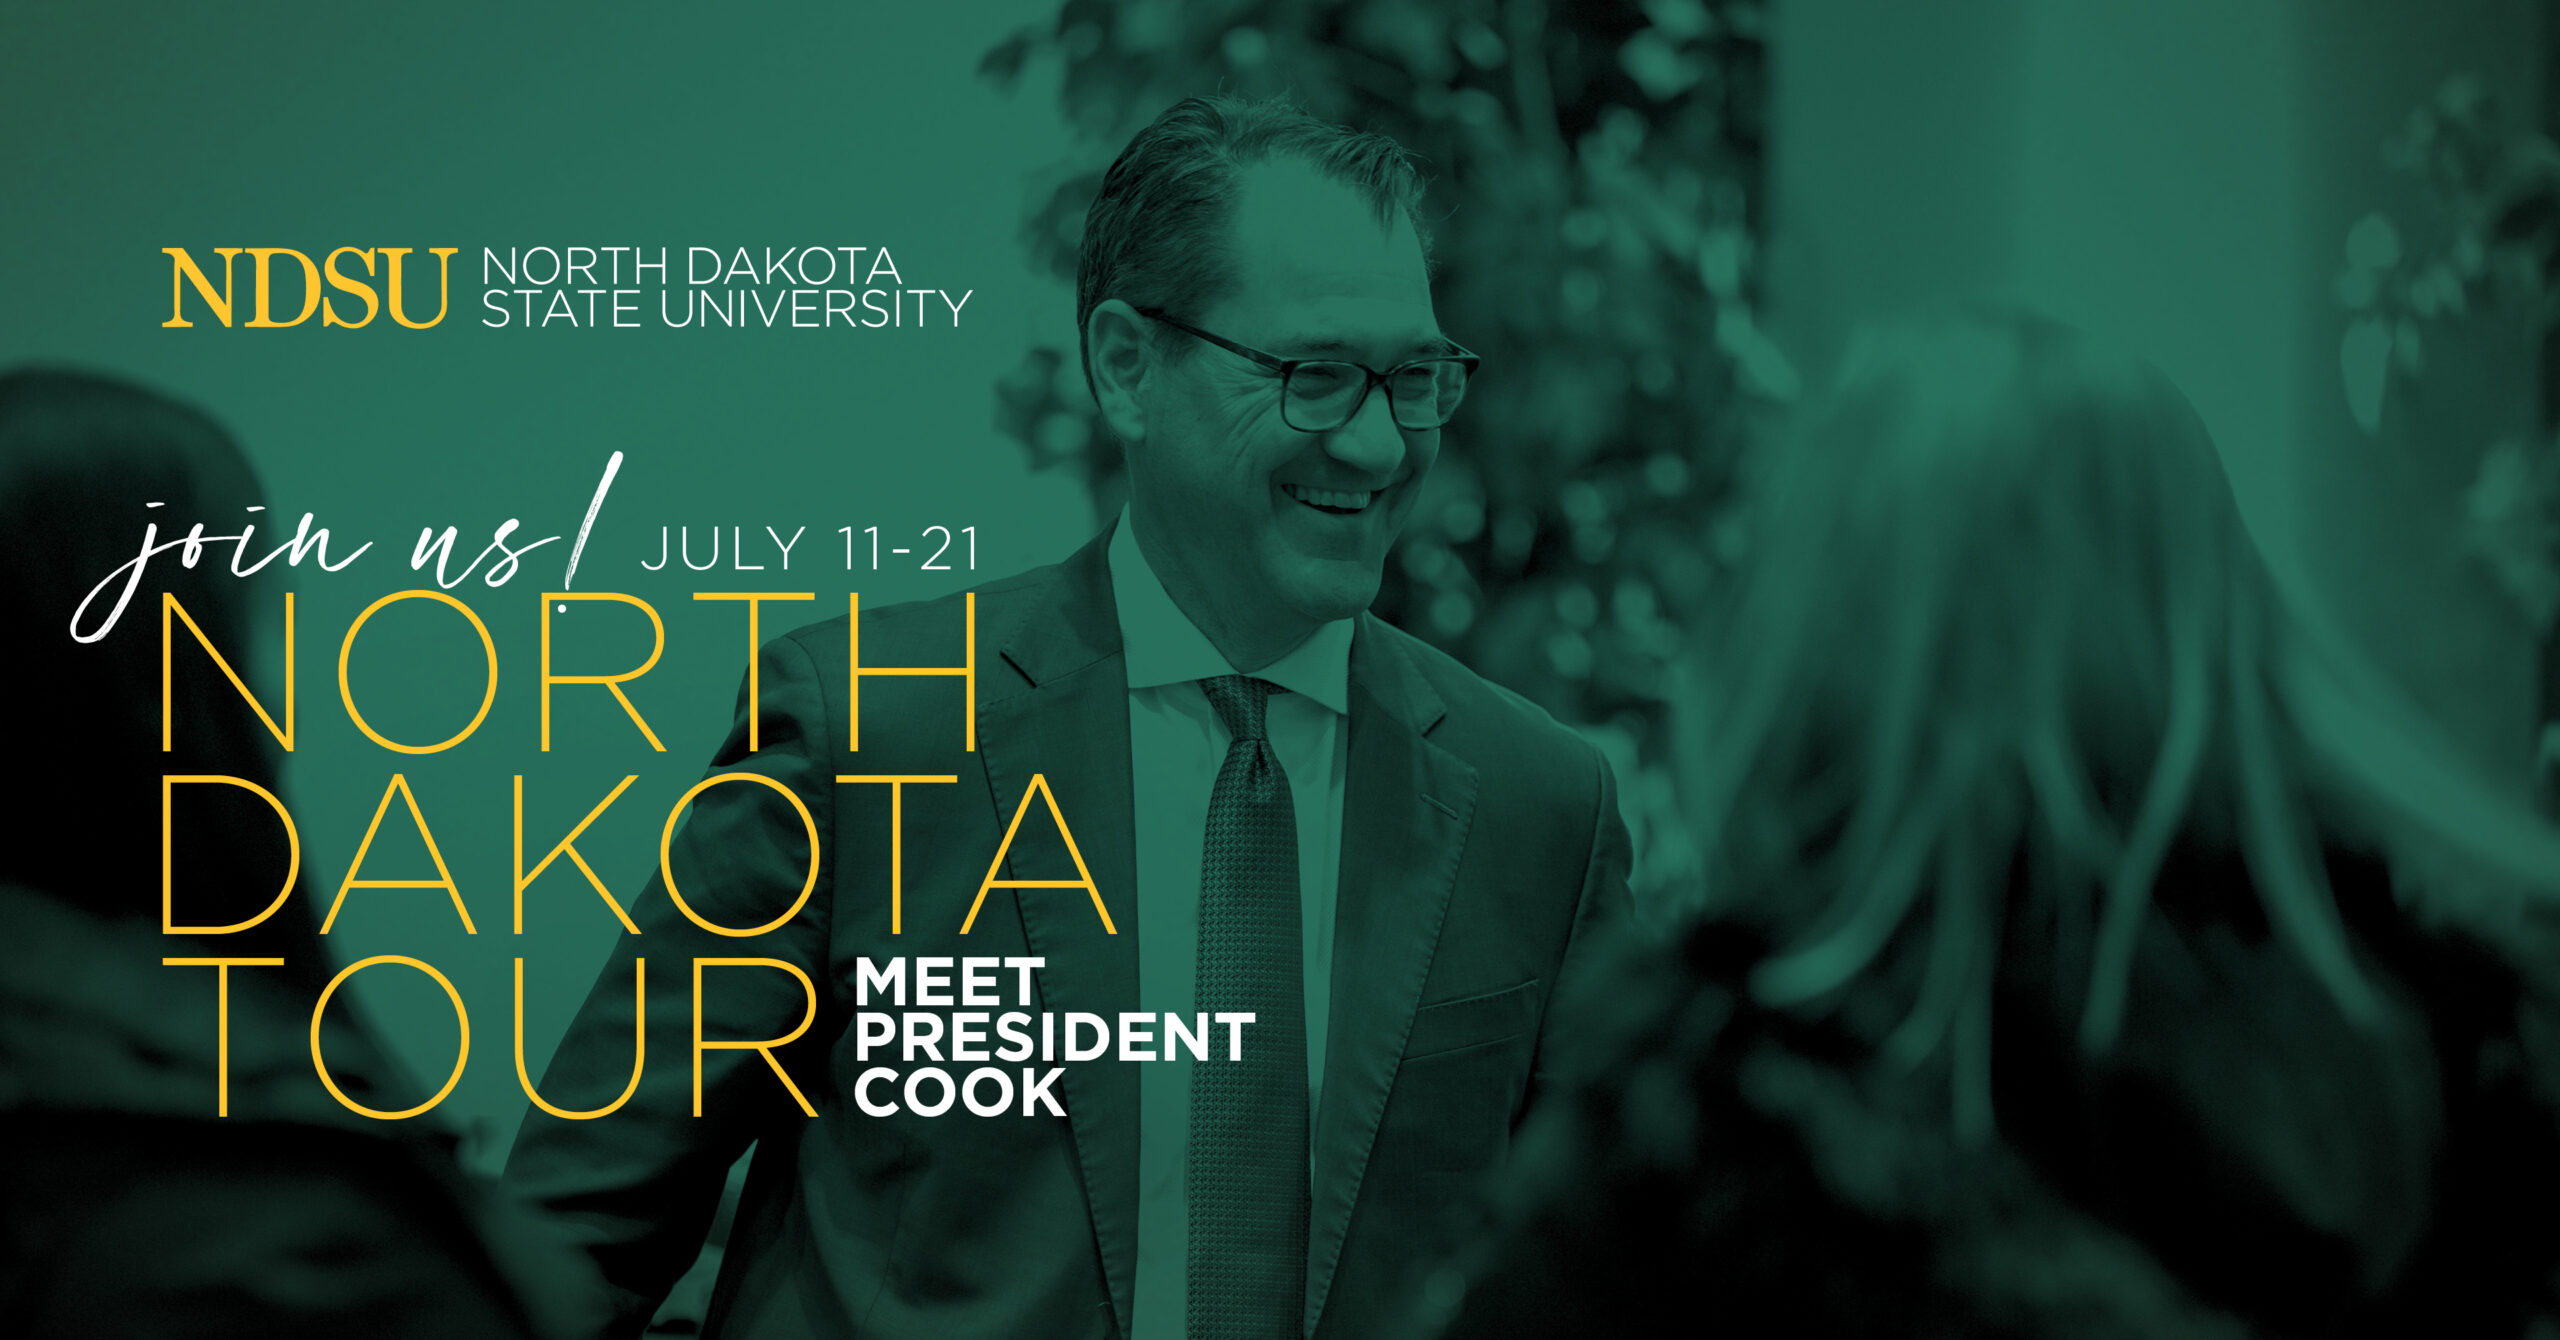 Banner: Join us! | North Dakota Tour | Meet President Cook | July 11 - 21 | NDSU | NDSU